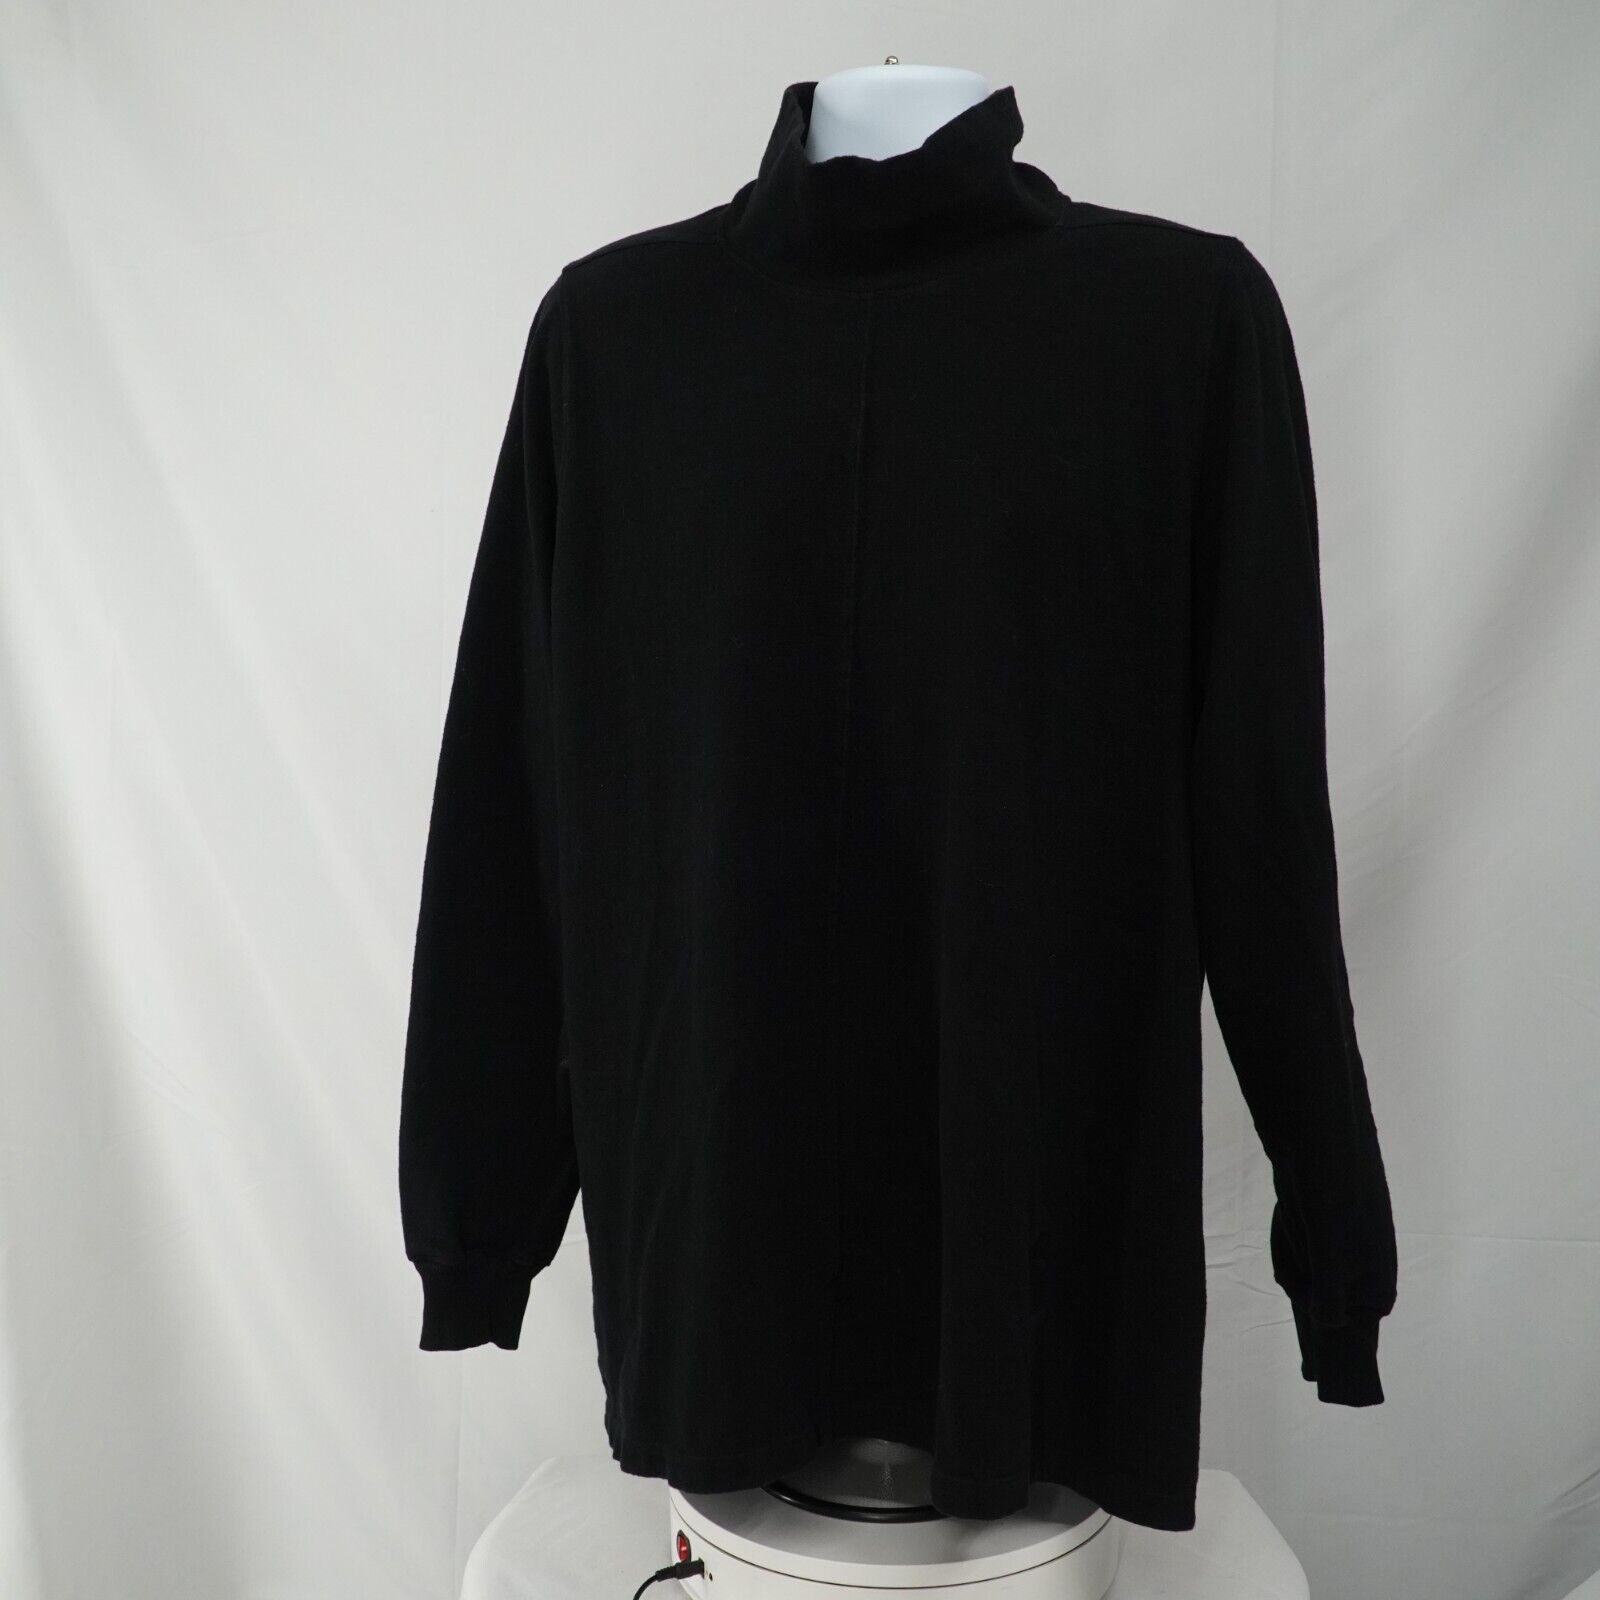 Rick Black Turtleneck Sweater Size Medium FW17 Glitter - 2